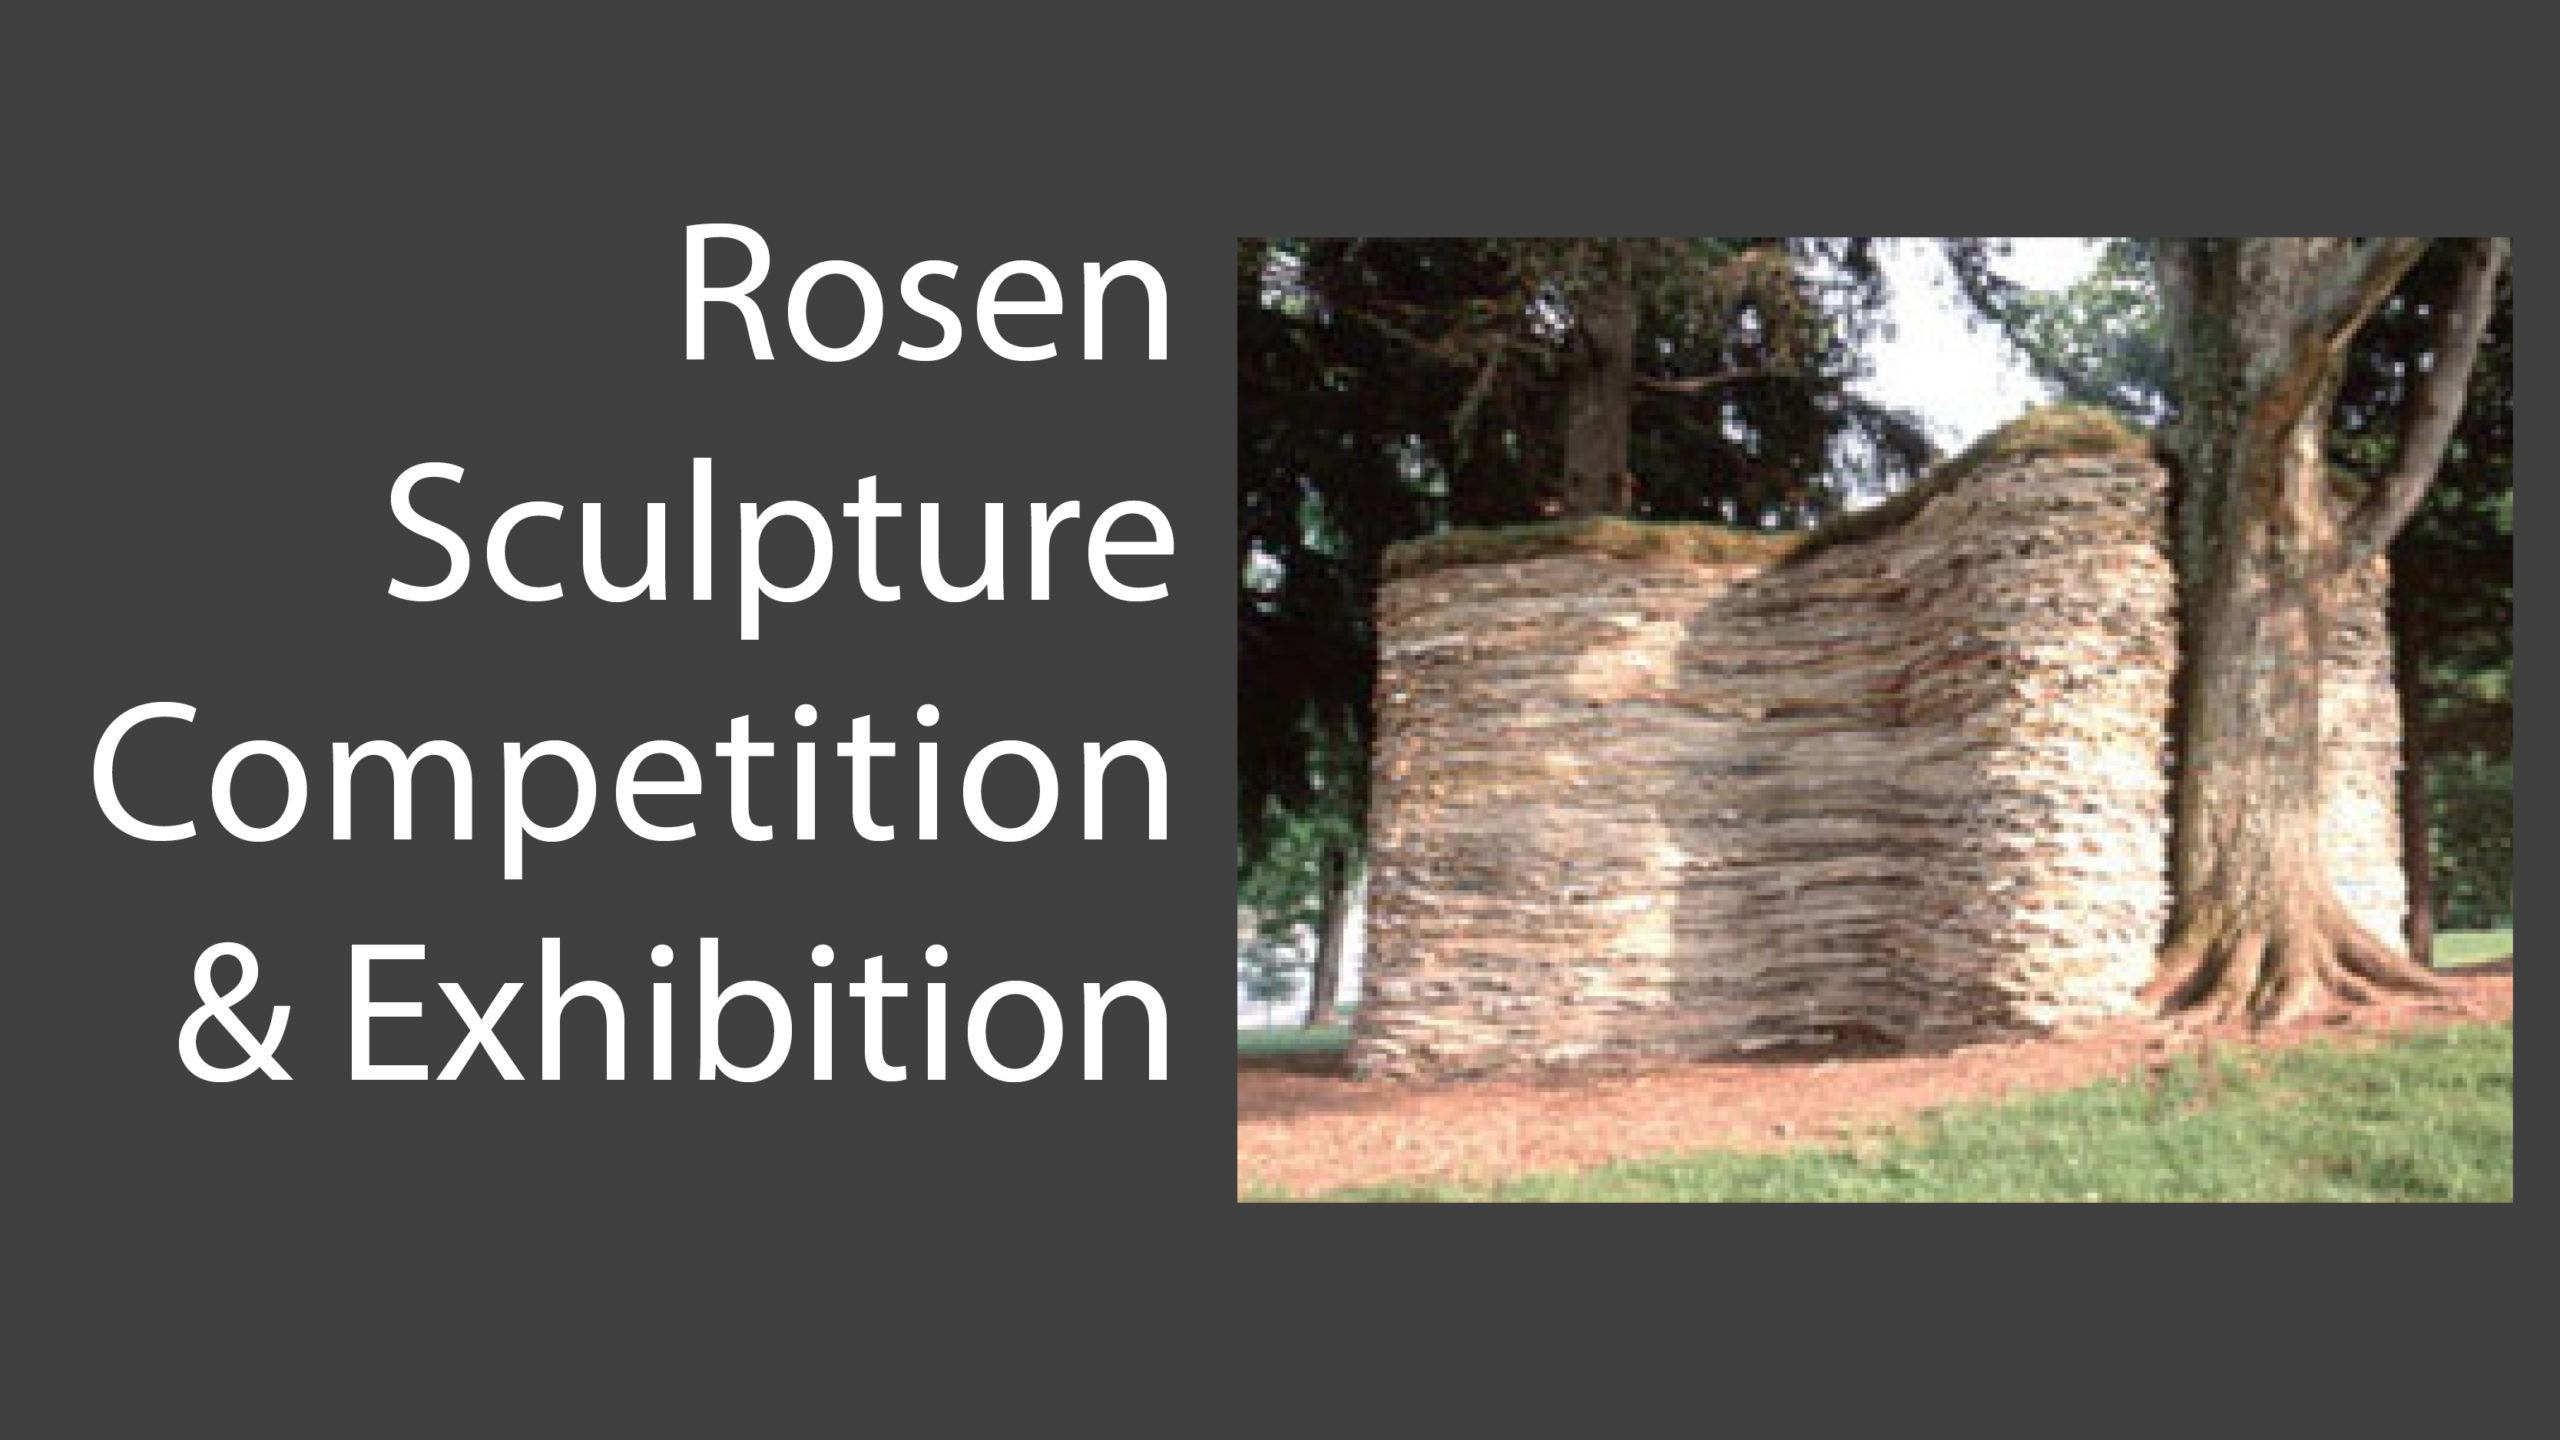 Steven Spiegel, Squeeze 2. 1998 / 12th Rosen Sculpture Competition Winner.